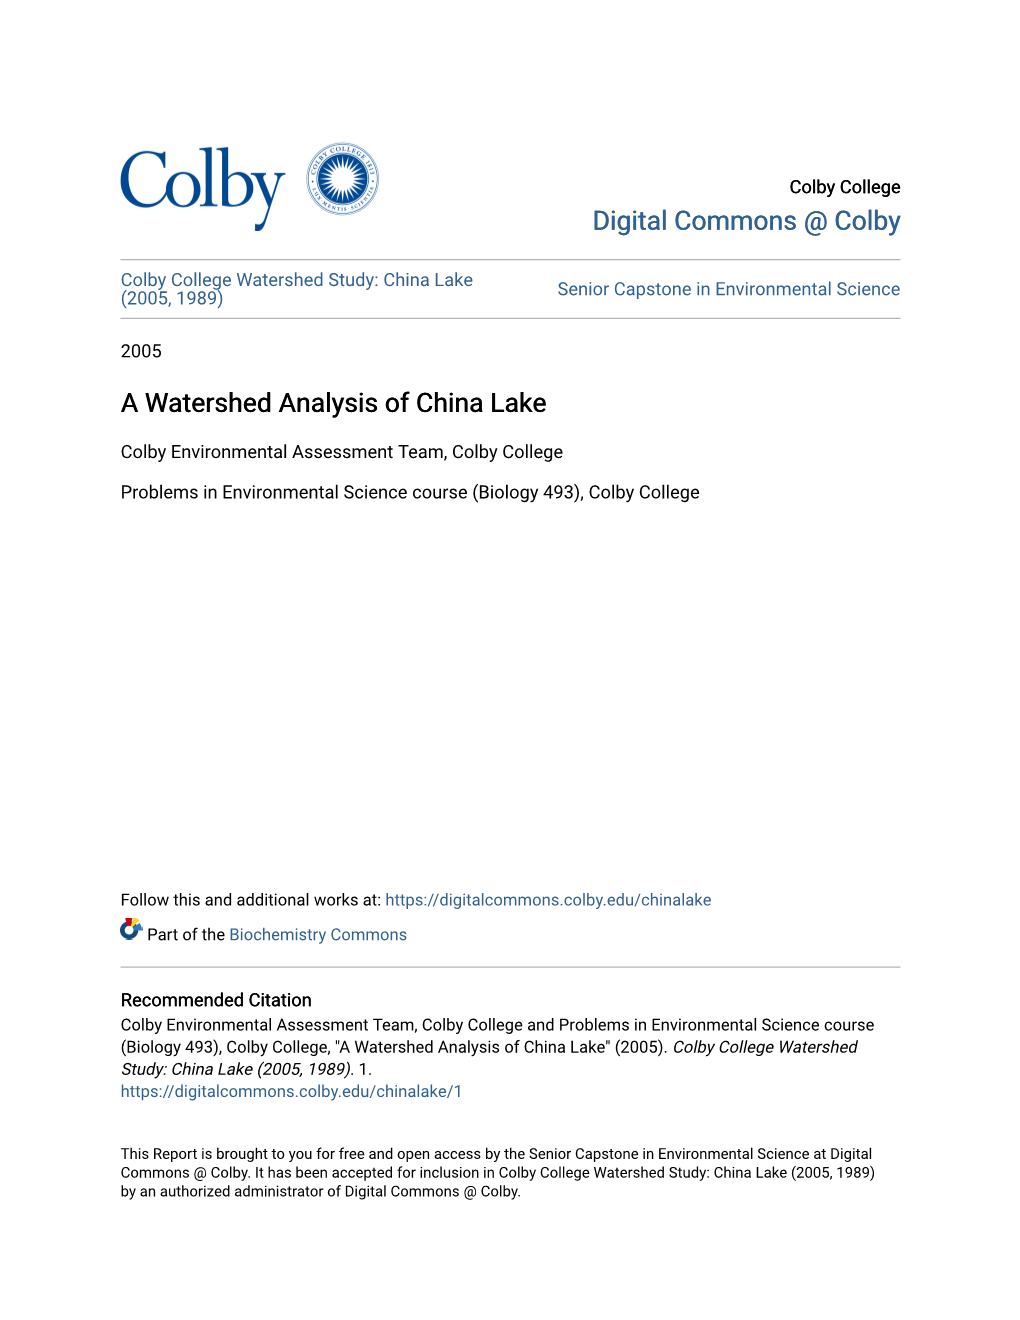 A Watershed Analysis of China Lake